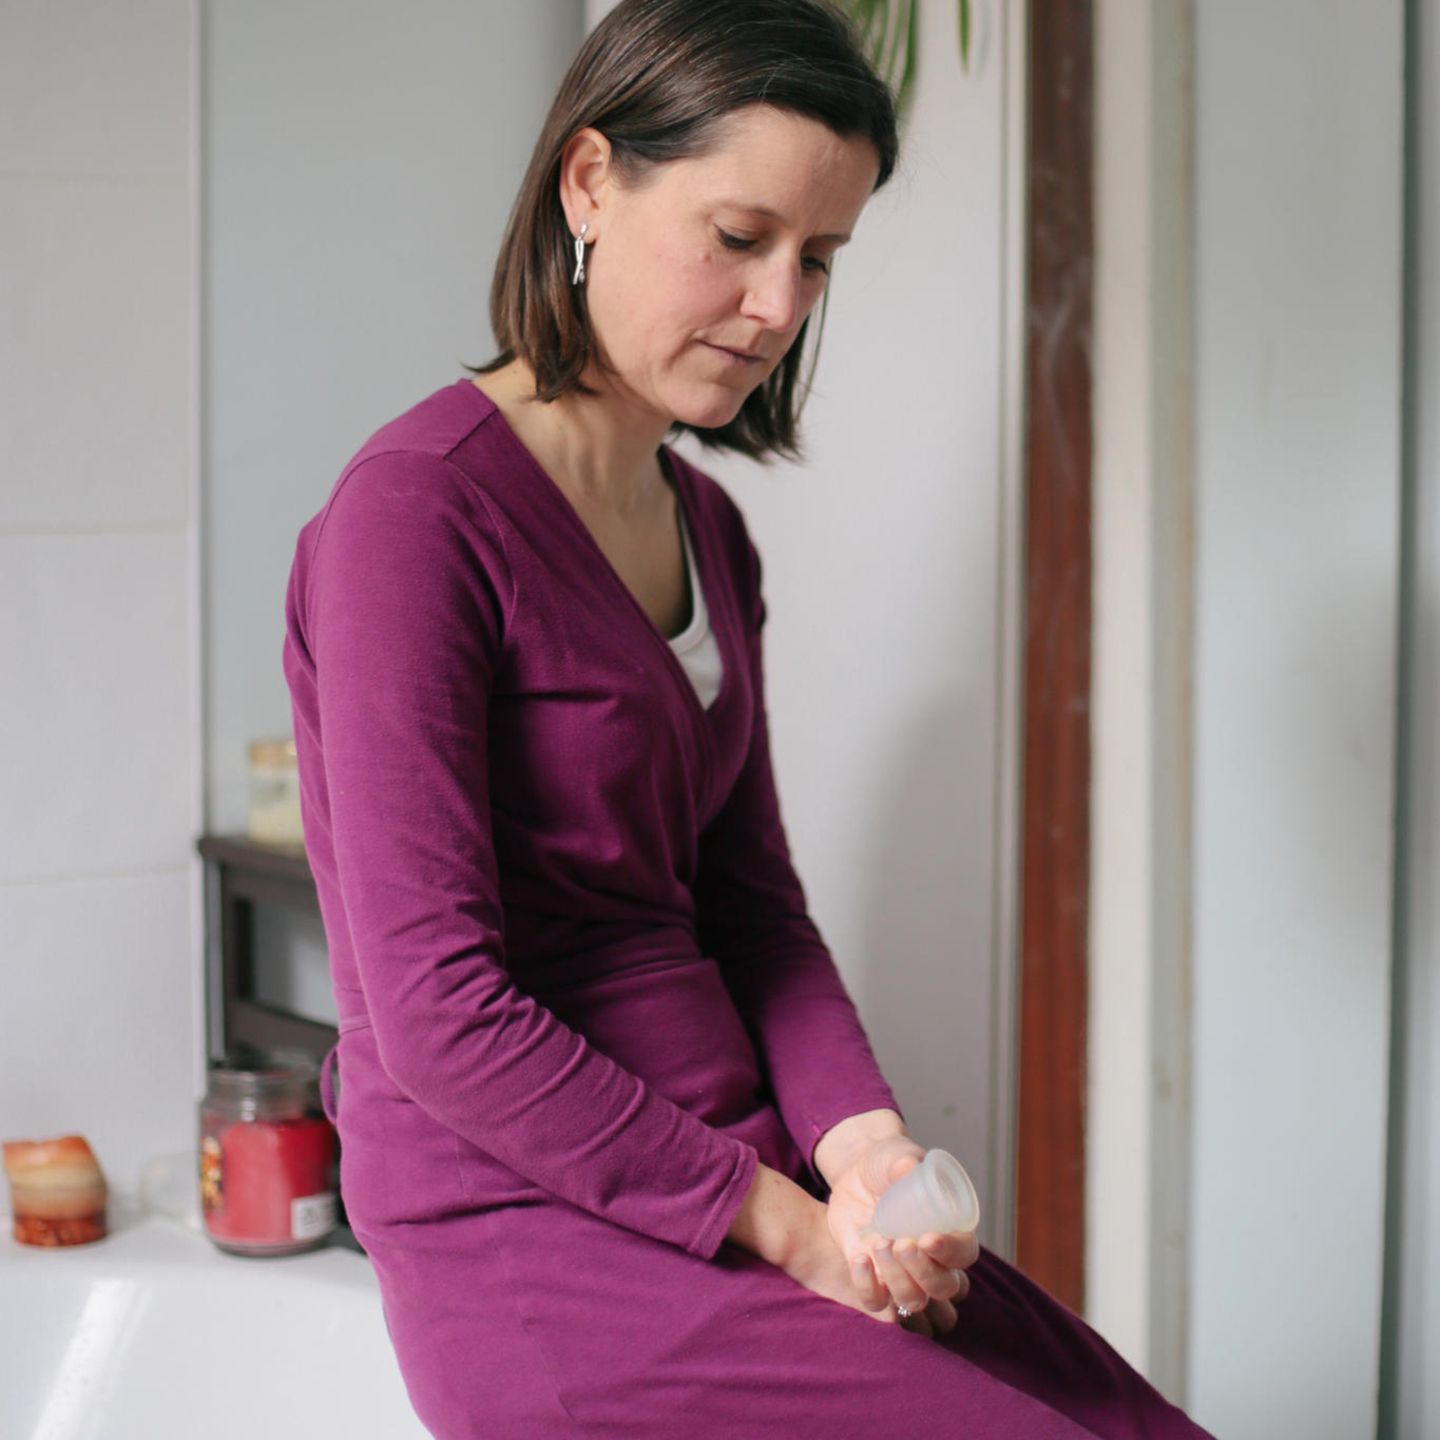 Periode in UK, Claire, 40, Menstruationstasse